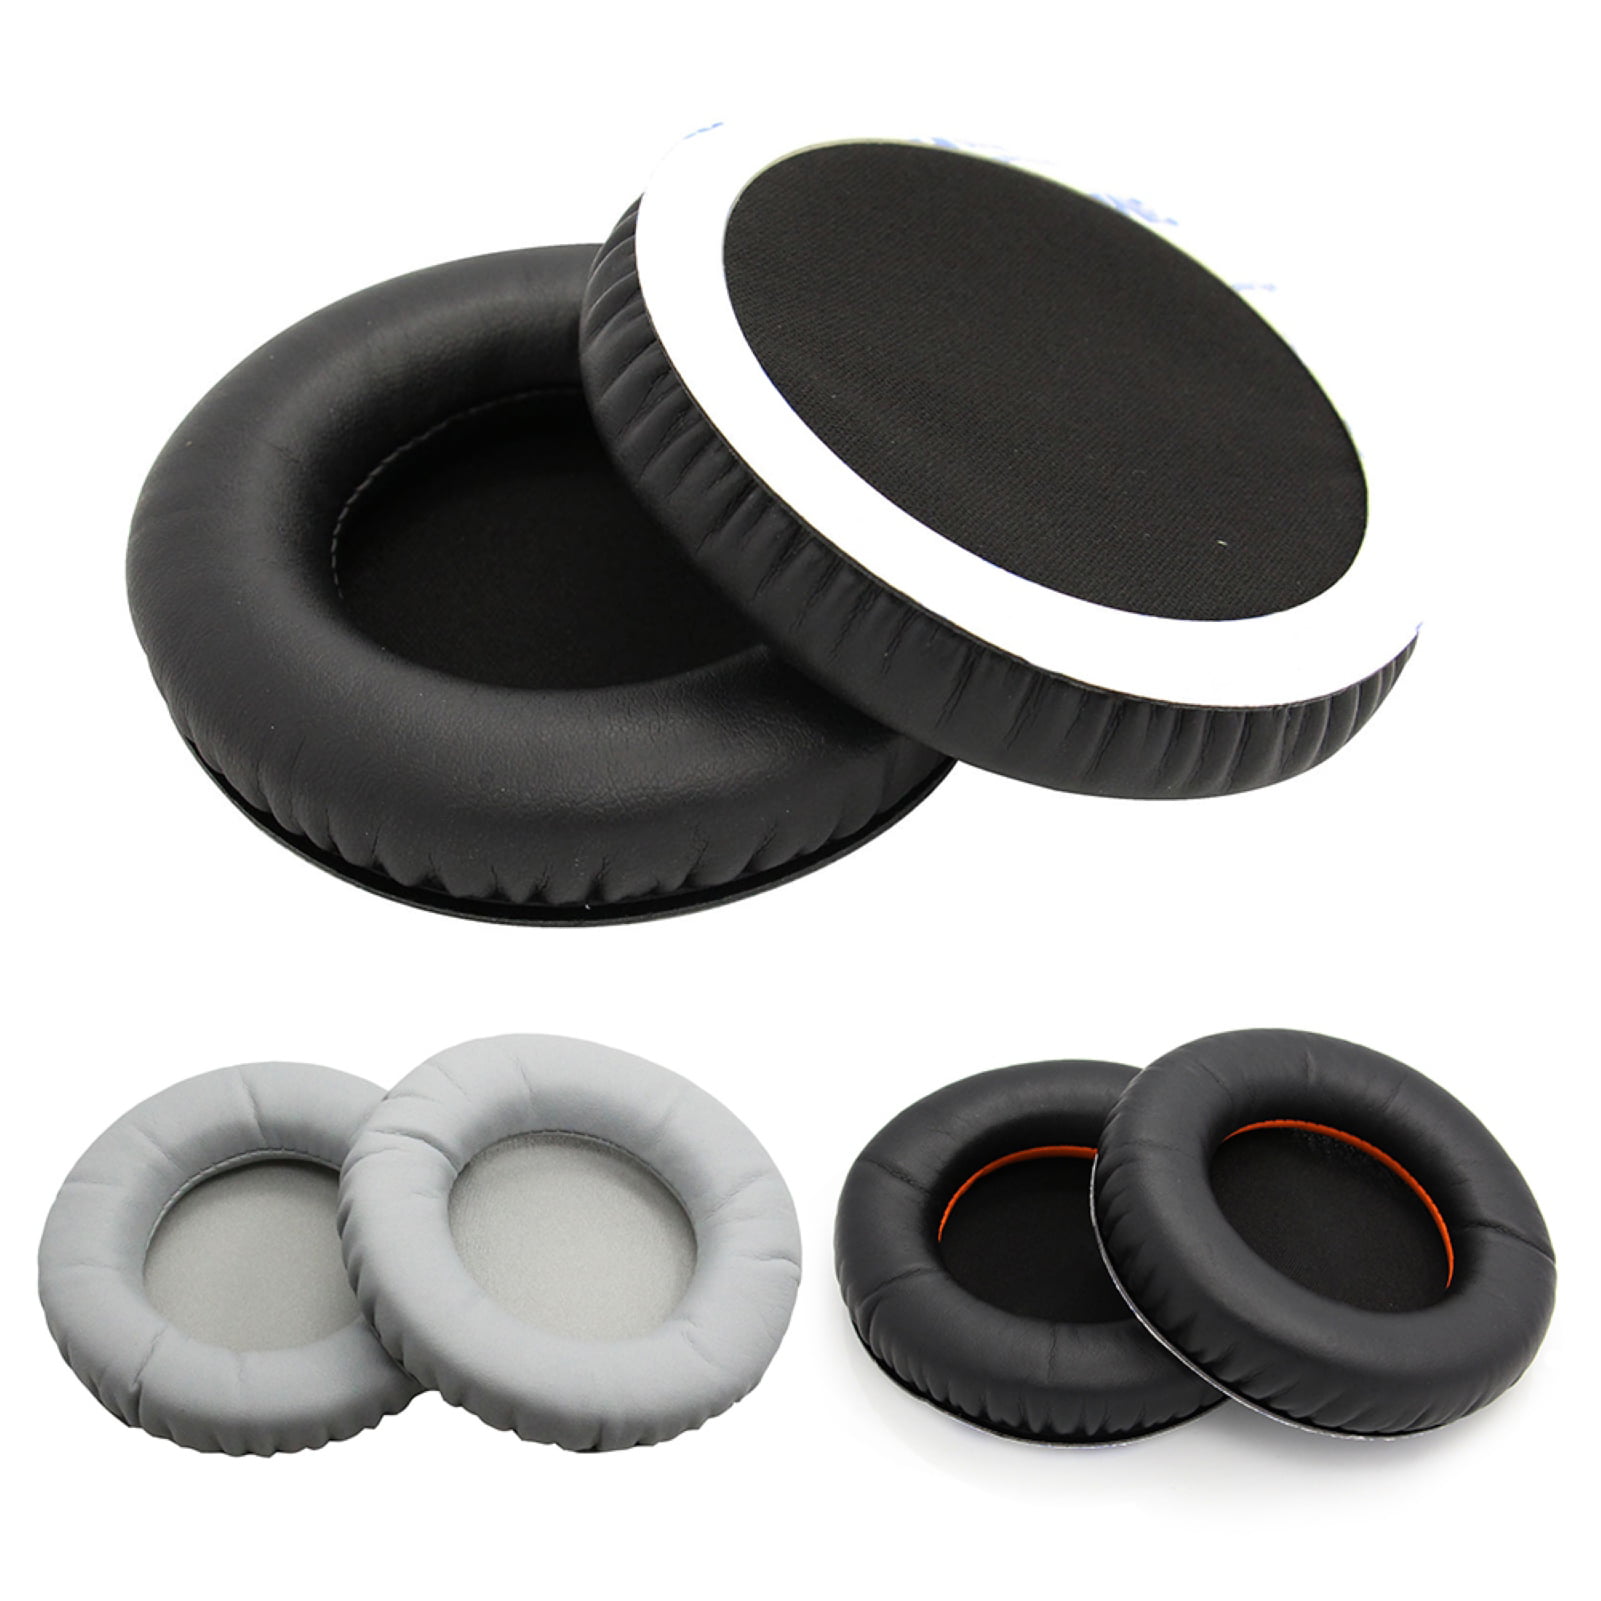 Foam Ear Pads Pillow Cushion Ear Cotton Earmuffs For Steelseries SIBERIA 650 